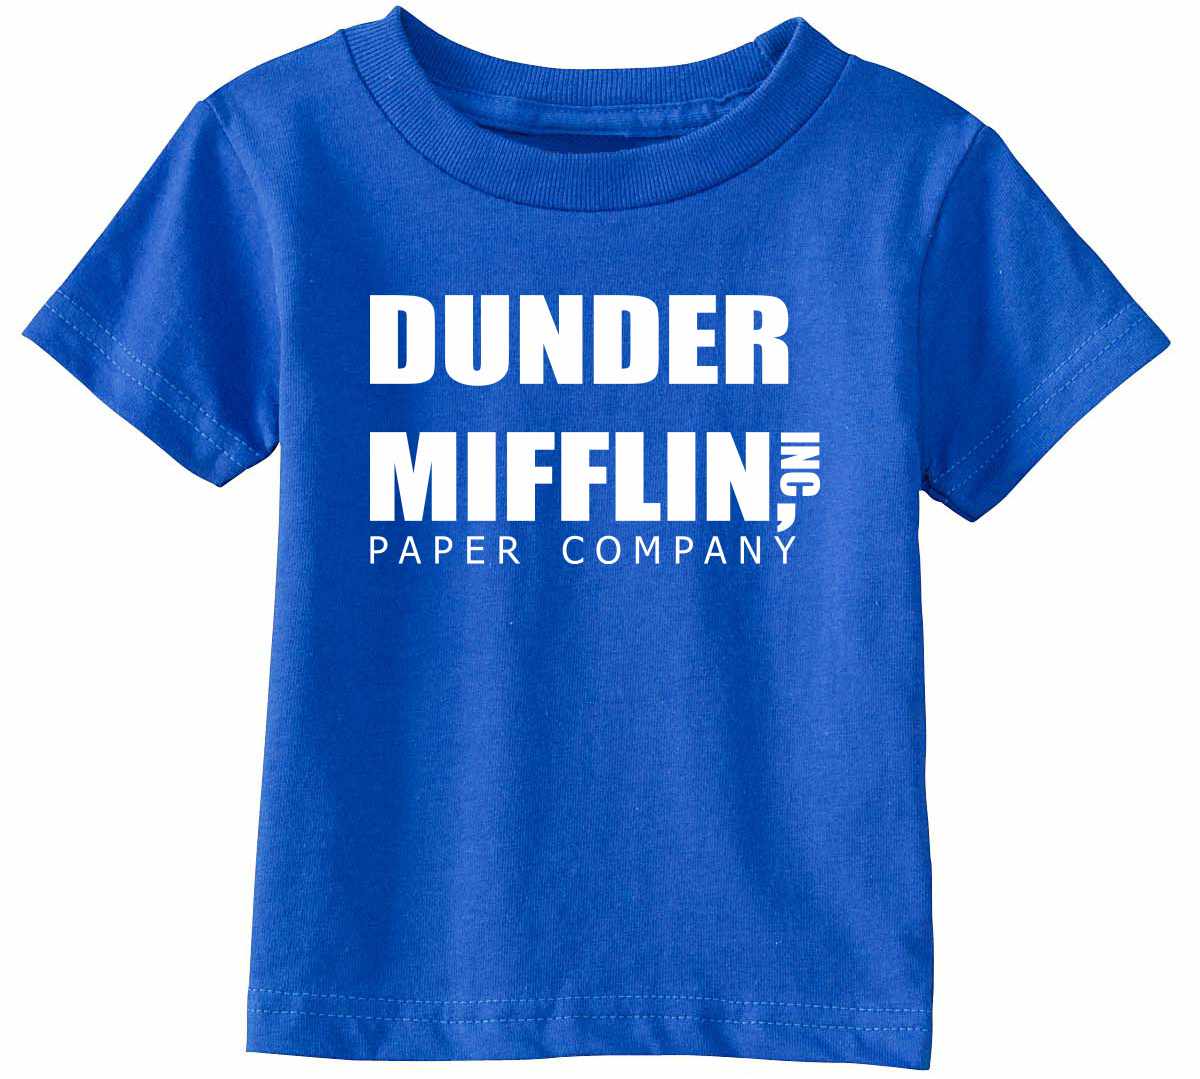 DUNDER MIFFLIN PAPER COMPANY on Infant-Toddler T-Shirt (#469-7)